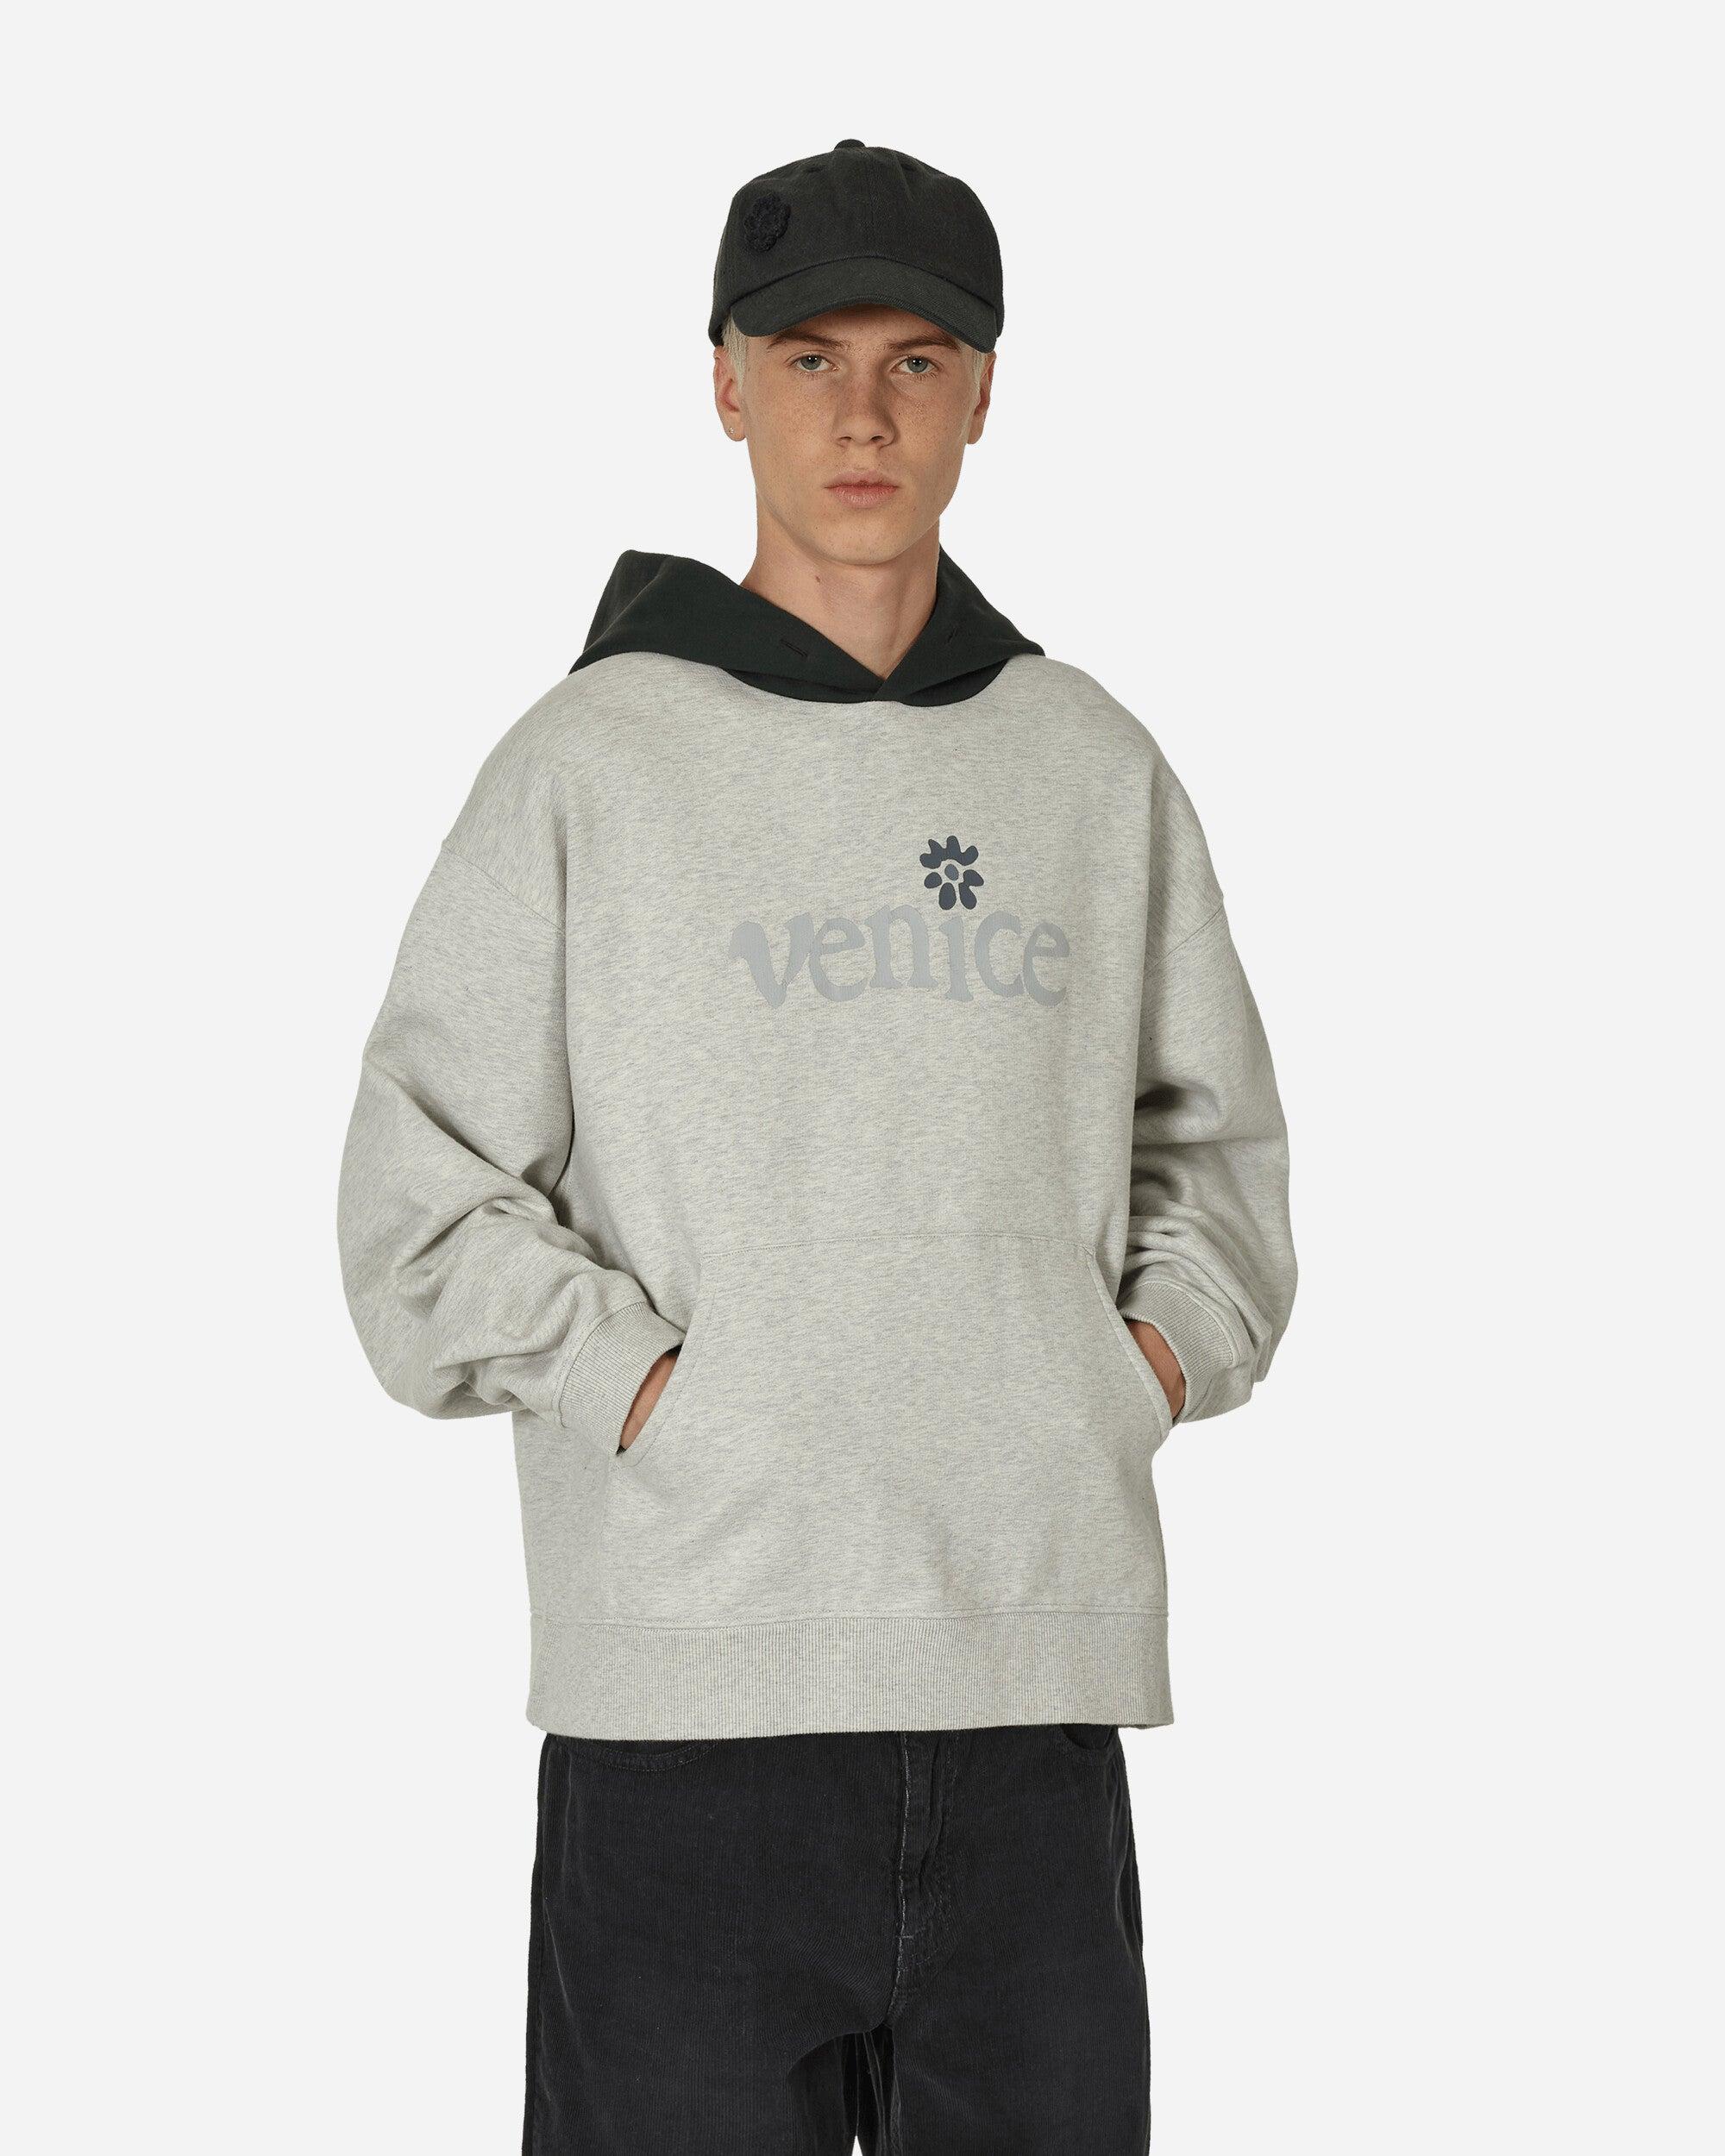 Venice Hooded Sweatshirt